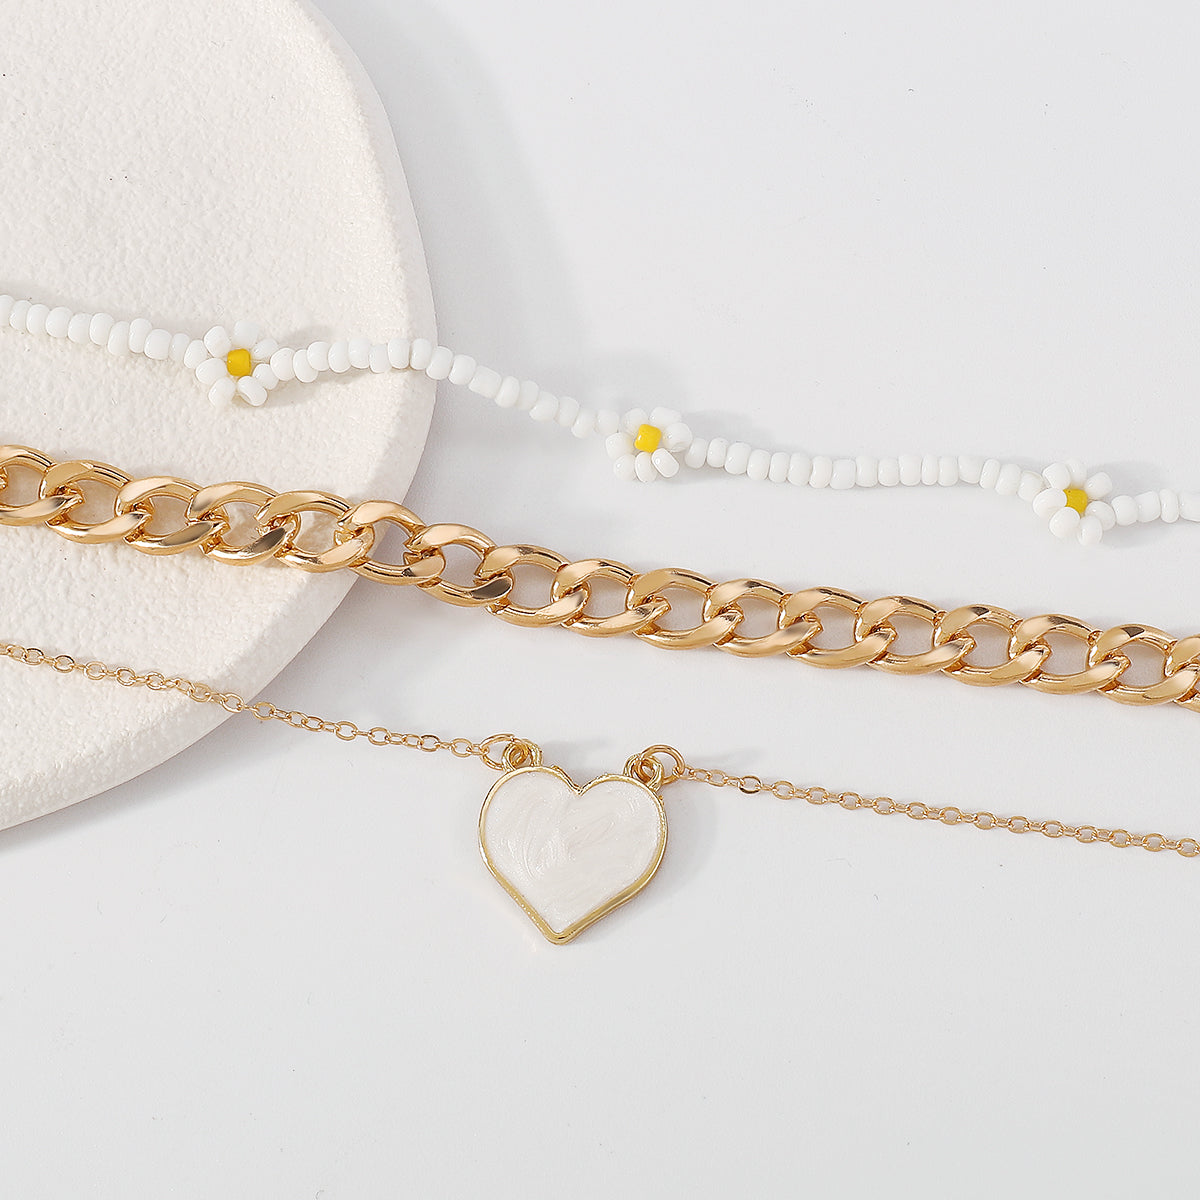 Boho Flower Beaded Chain Pink Heart Necklace medyjewelry